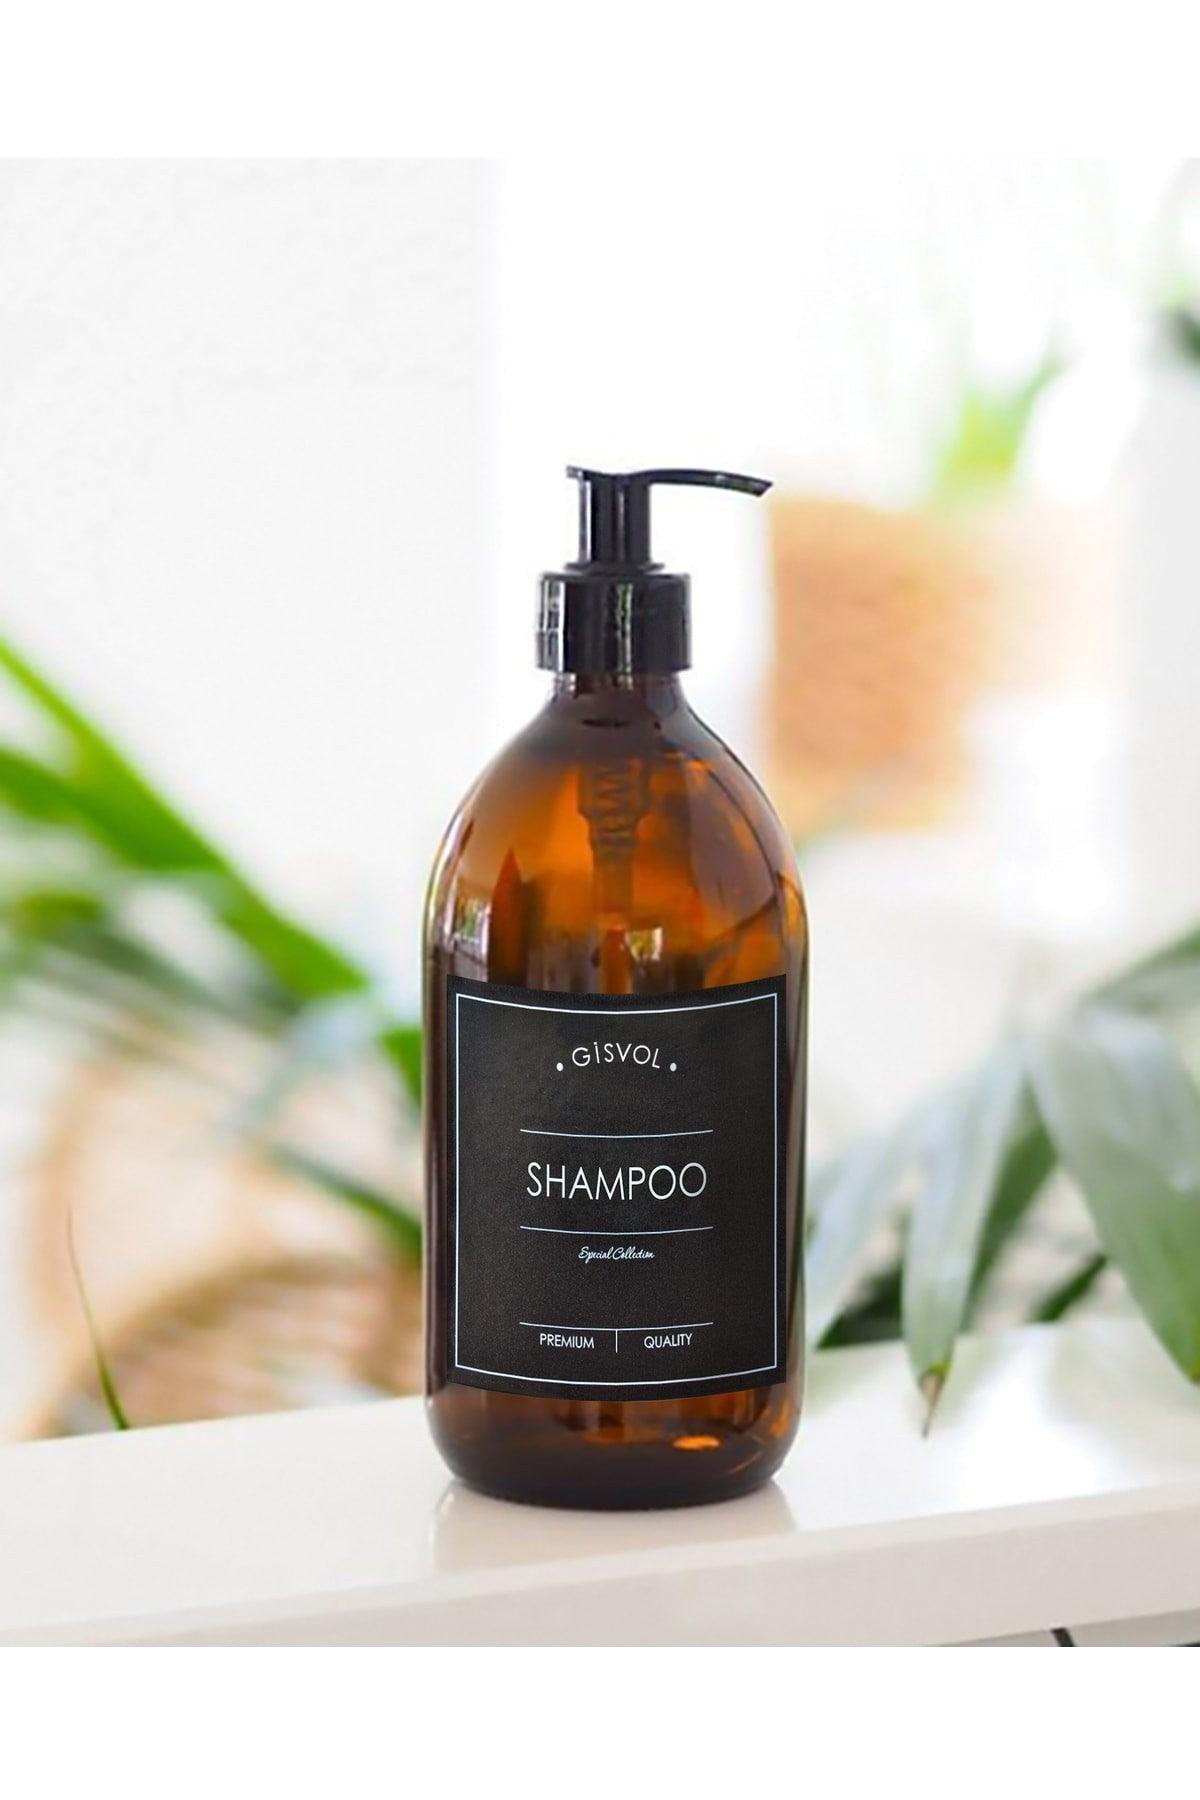 300ml Glass Bottle Rustic Amber Shampoo Black Label - Swordslife